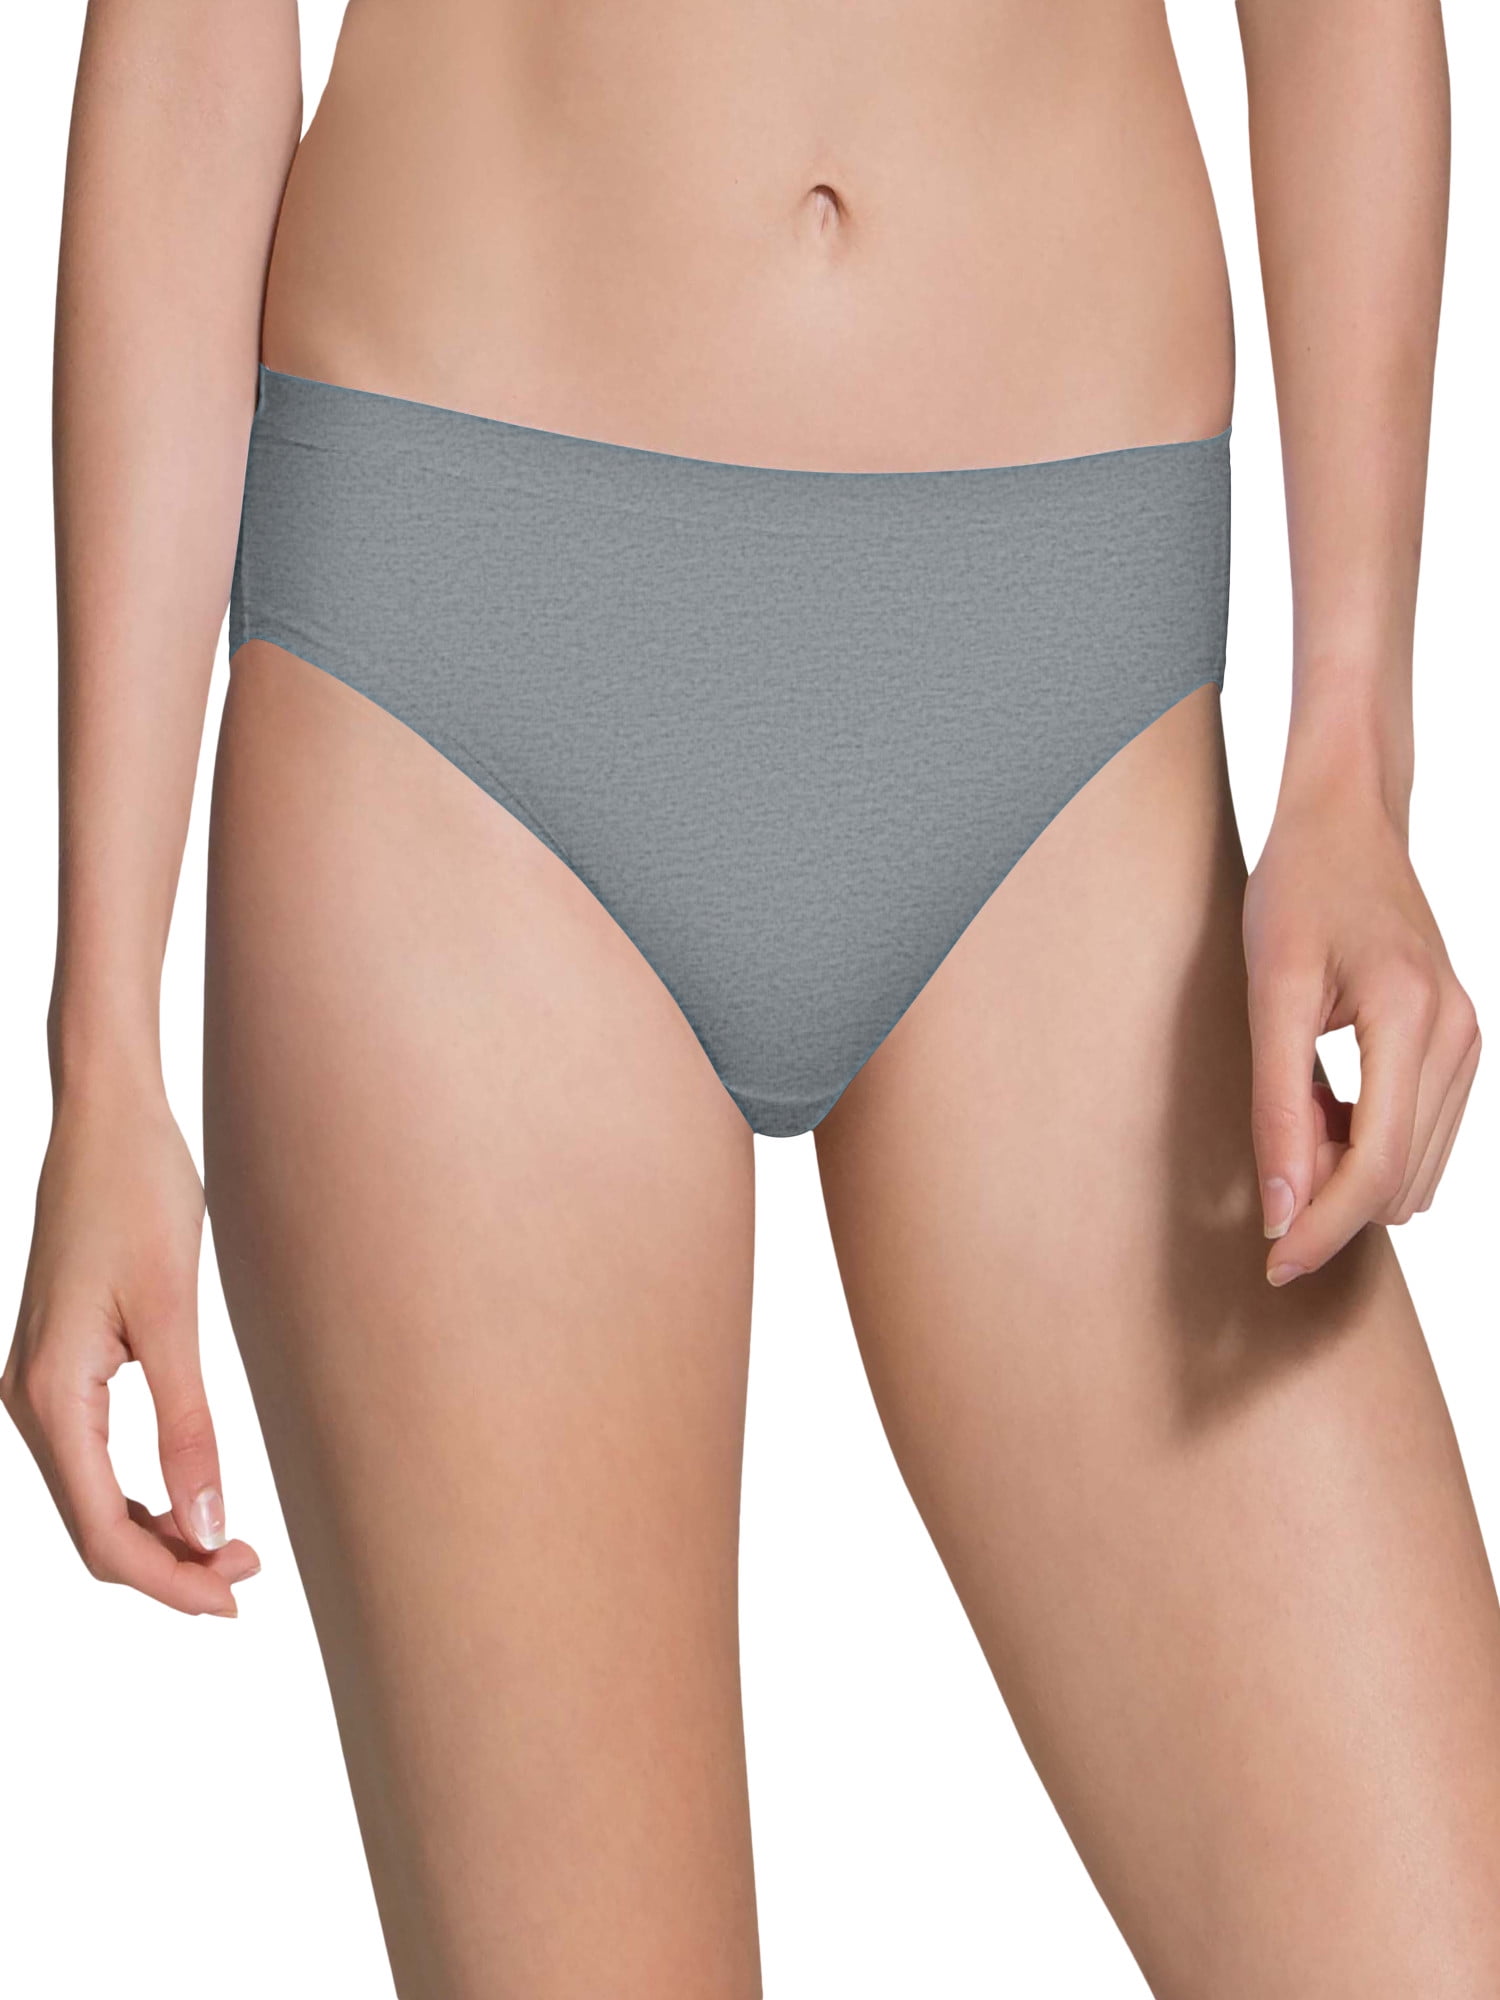 6 Bikini Underwear Woman Premium Nylon Light Soft Silky Brief Hip40"-44"Size XL 